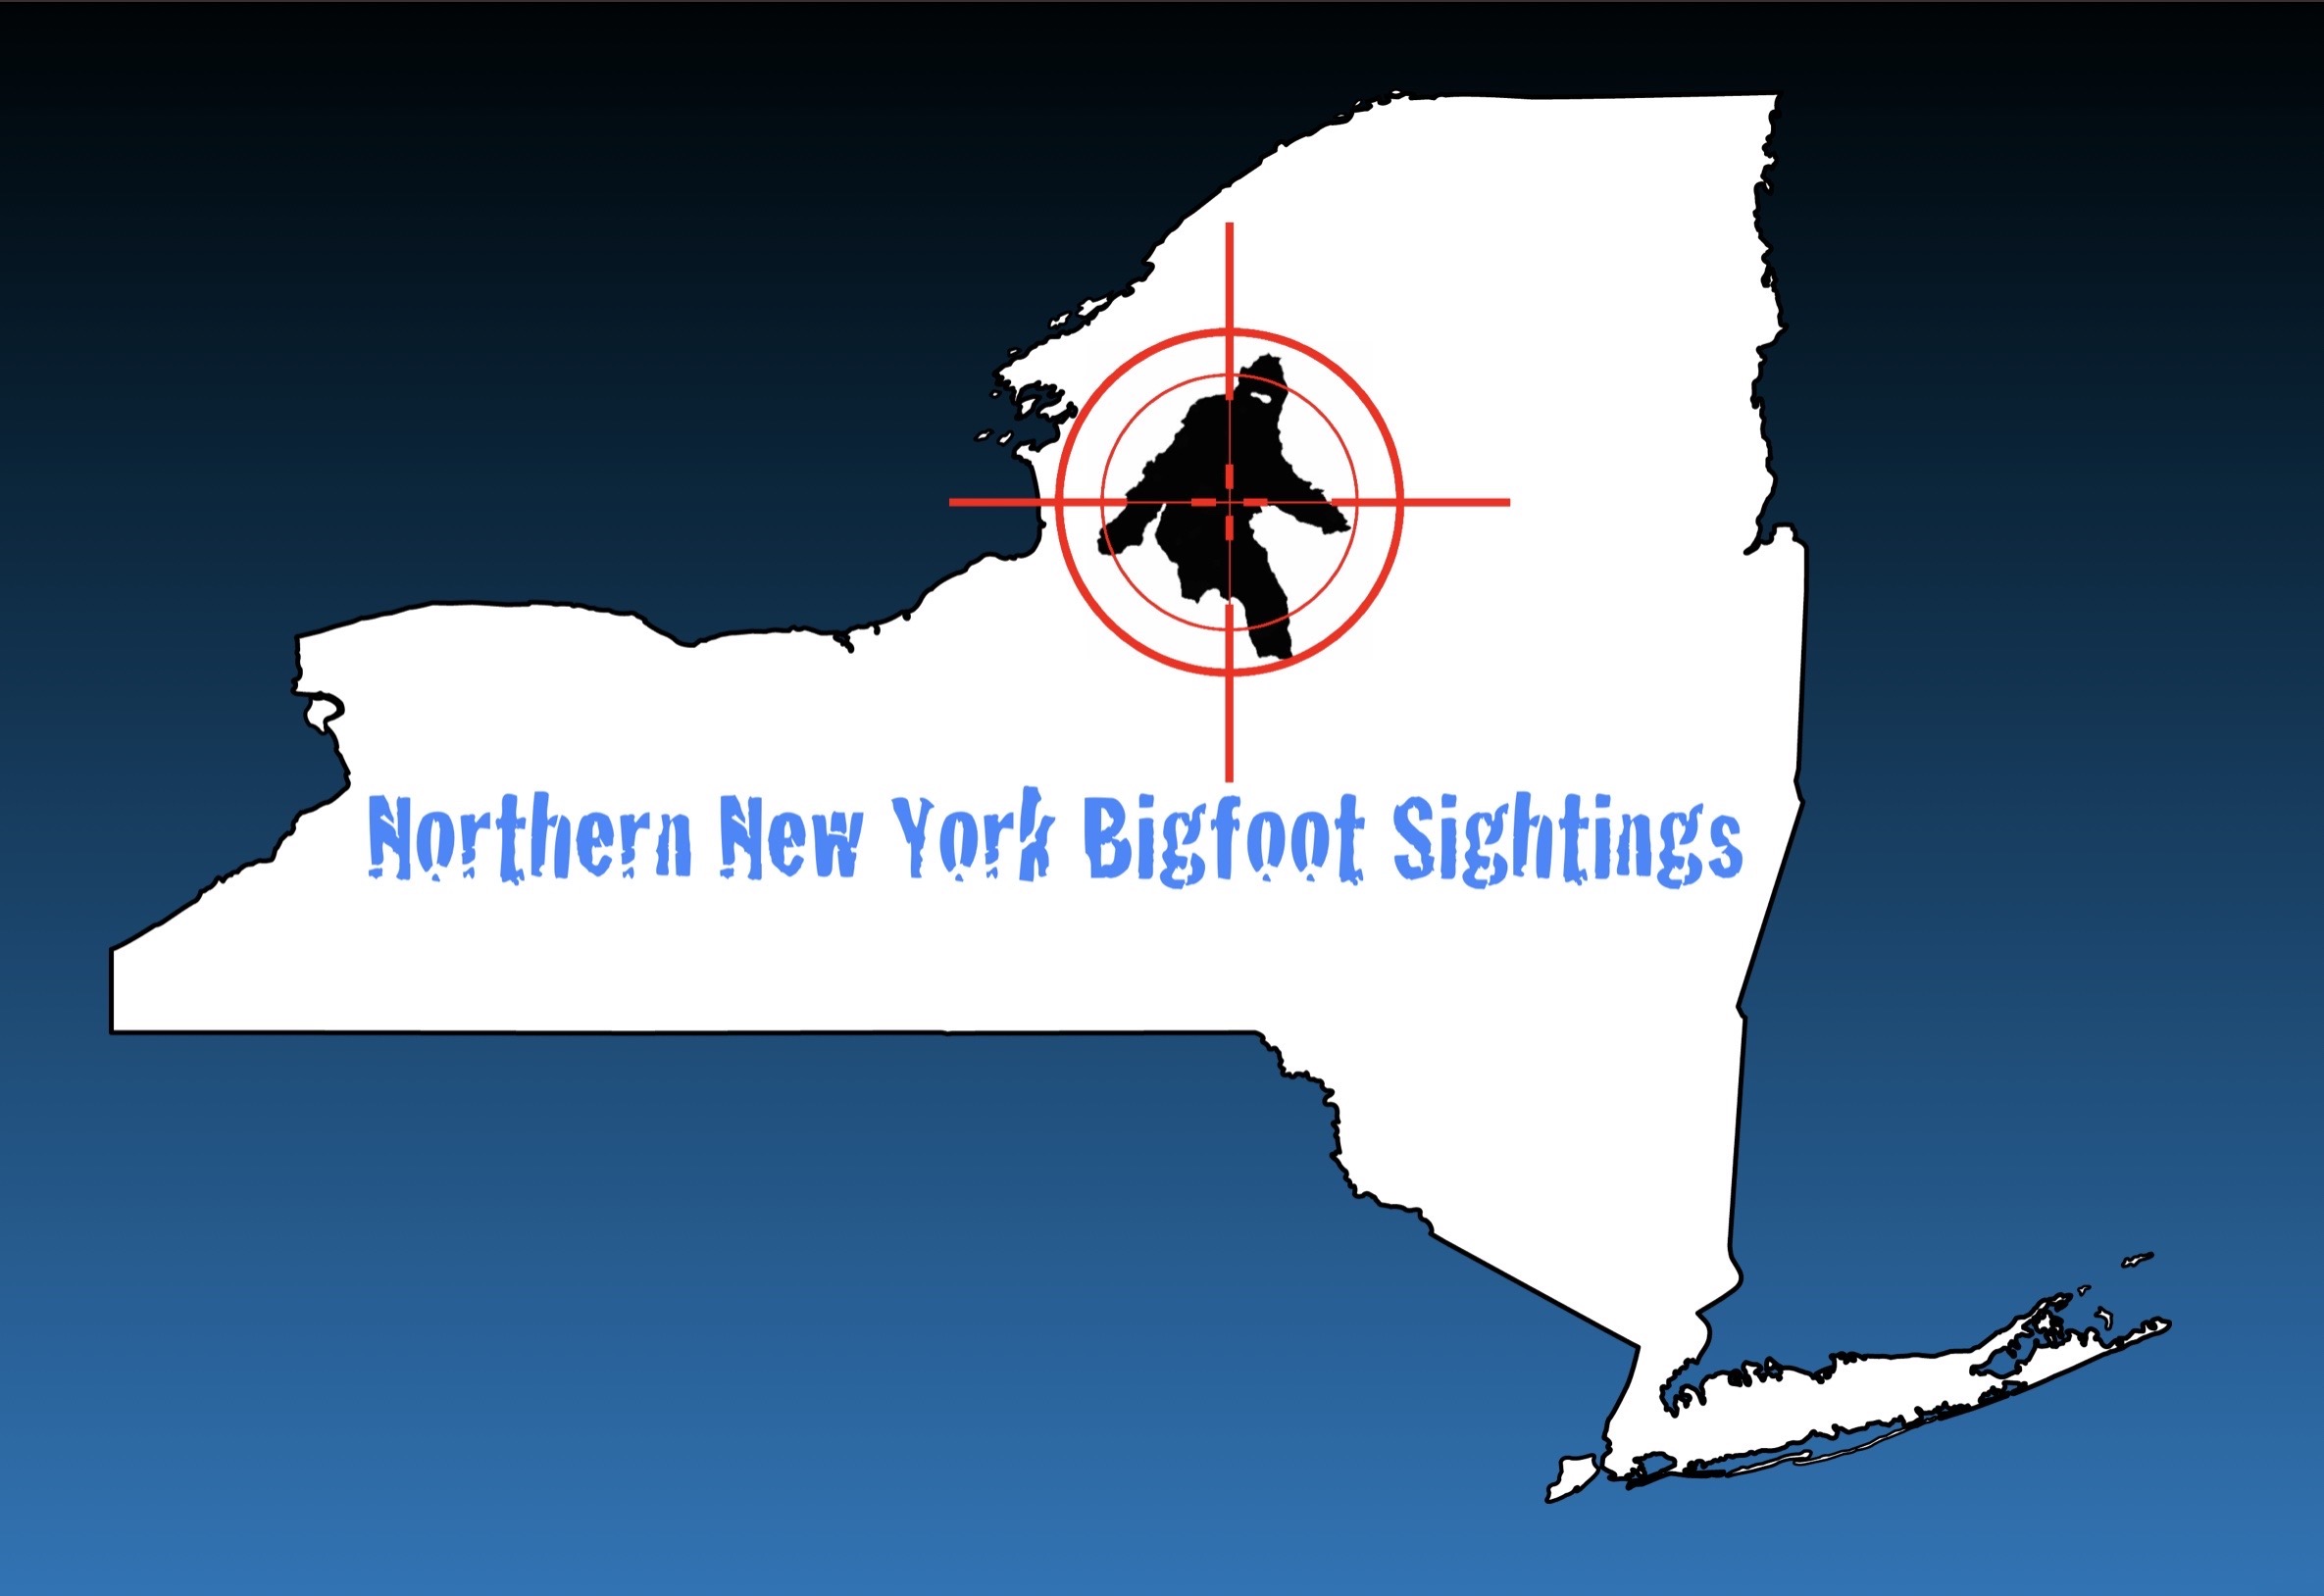 1970s and 80s Northern New York Bigfoot Sightings